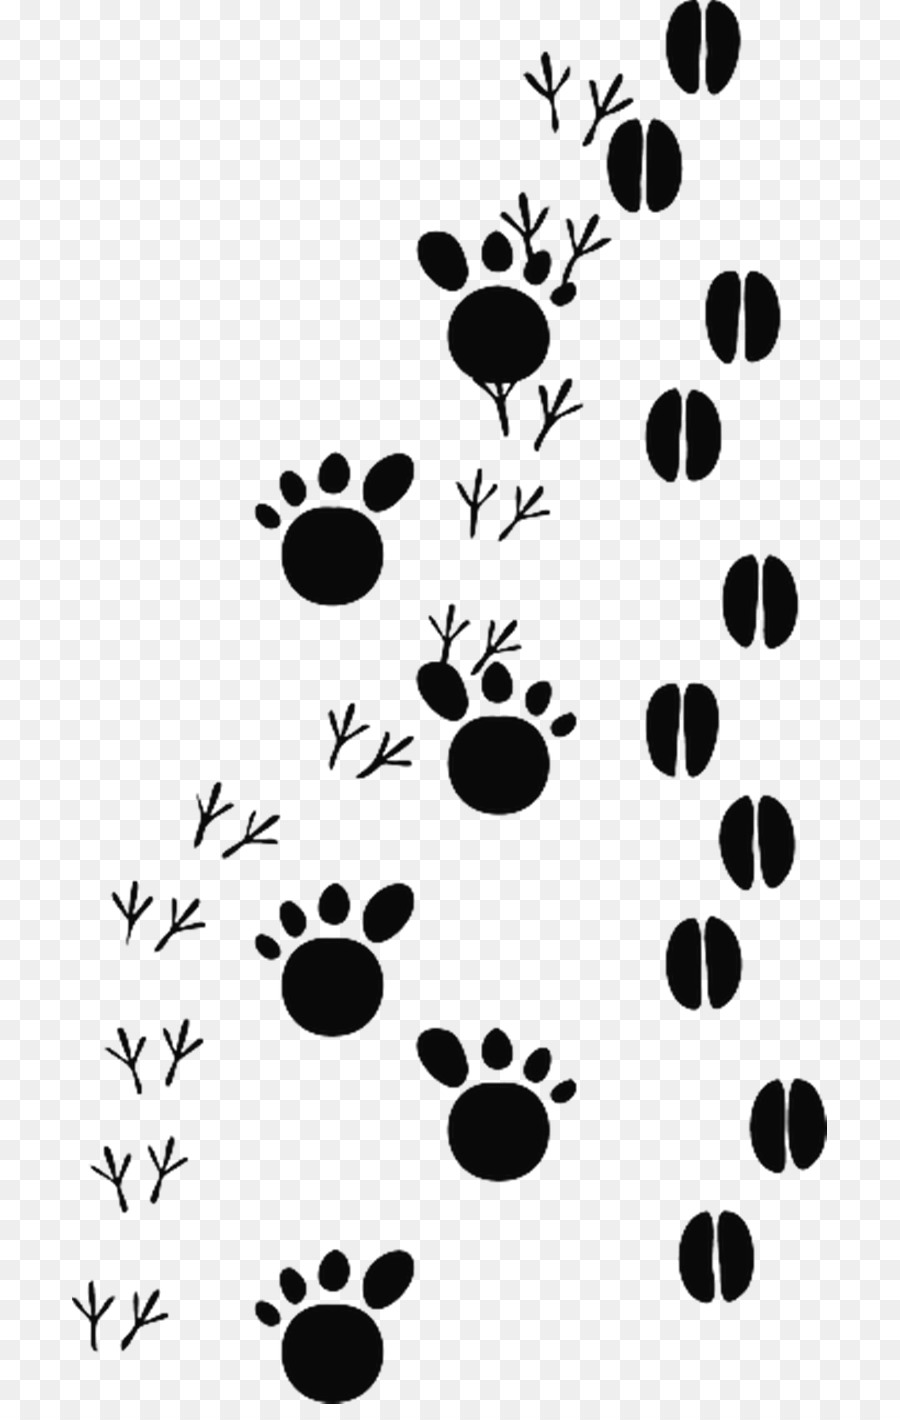 Animal track Fußabdruck Clip art - Katze Fußabdrücke